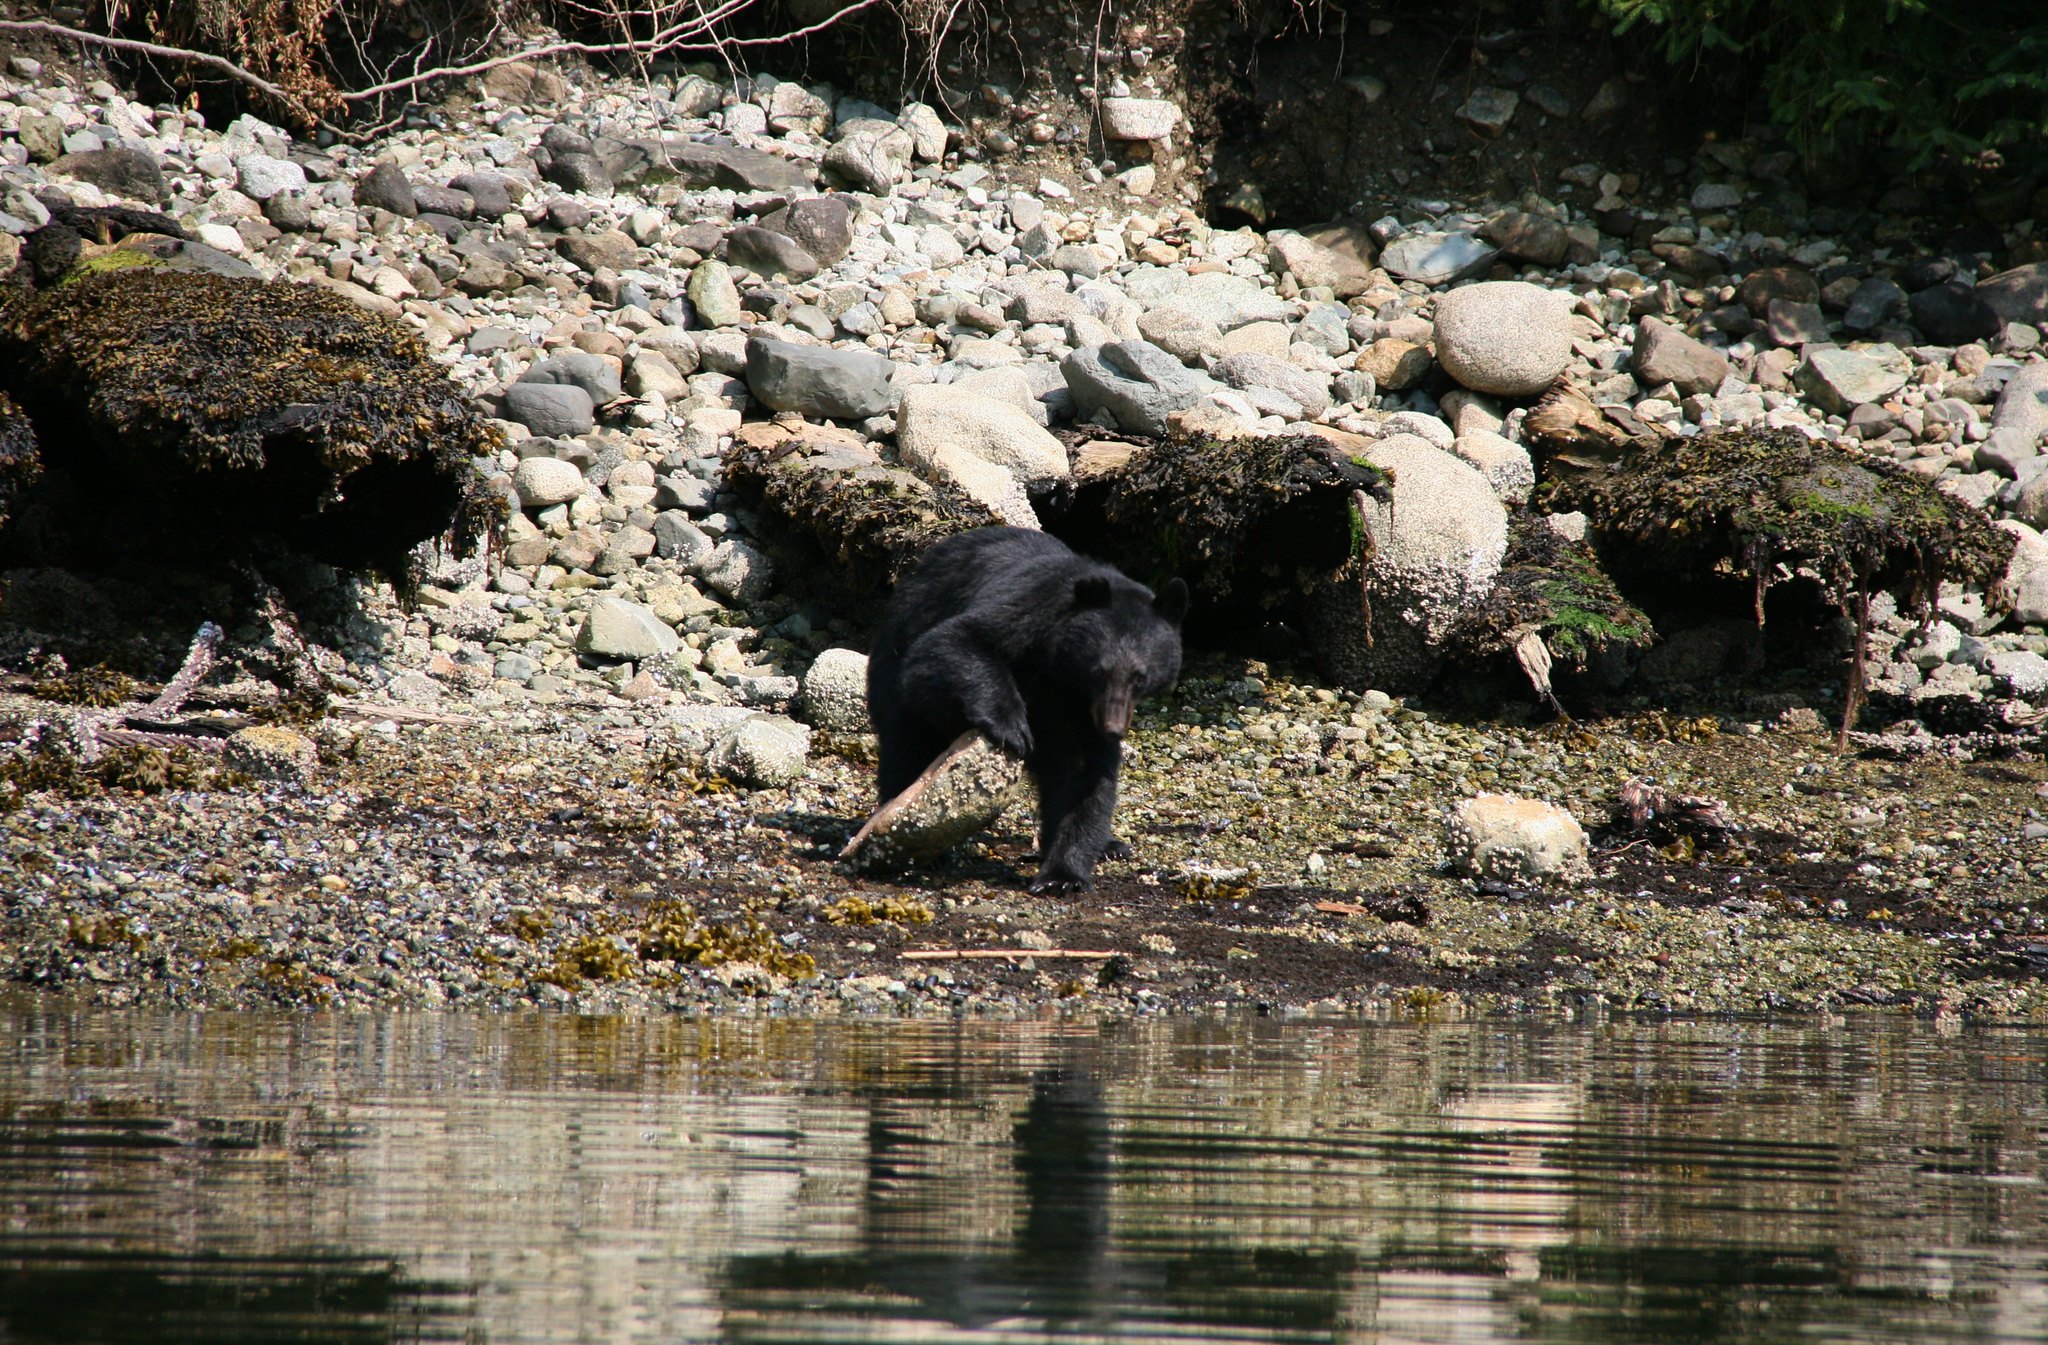 A black bear checks under a rock by a river.